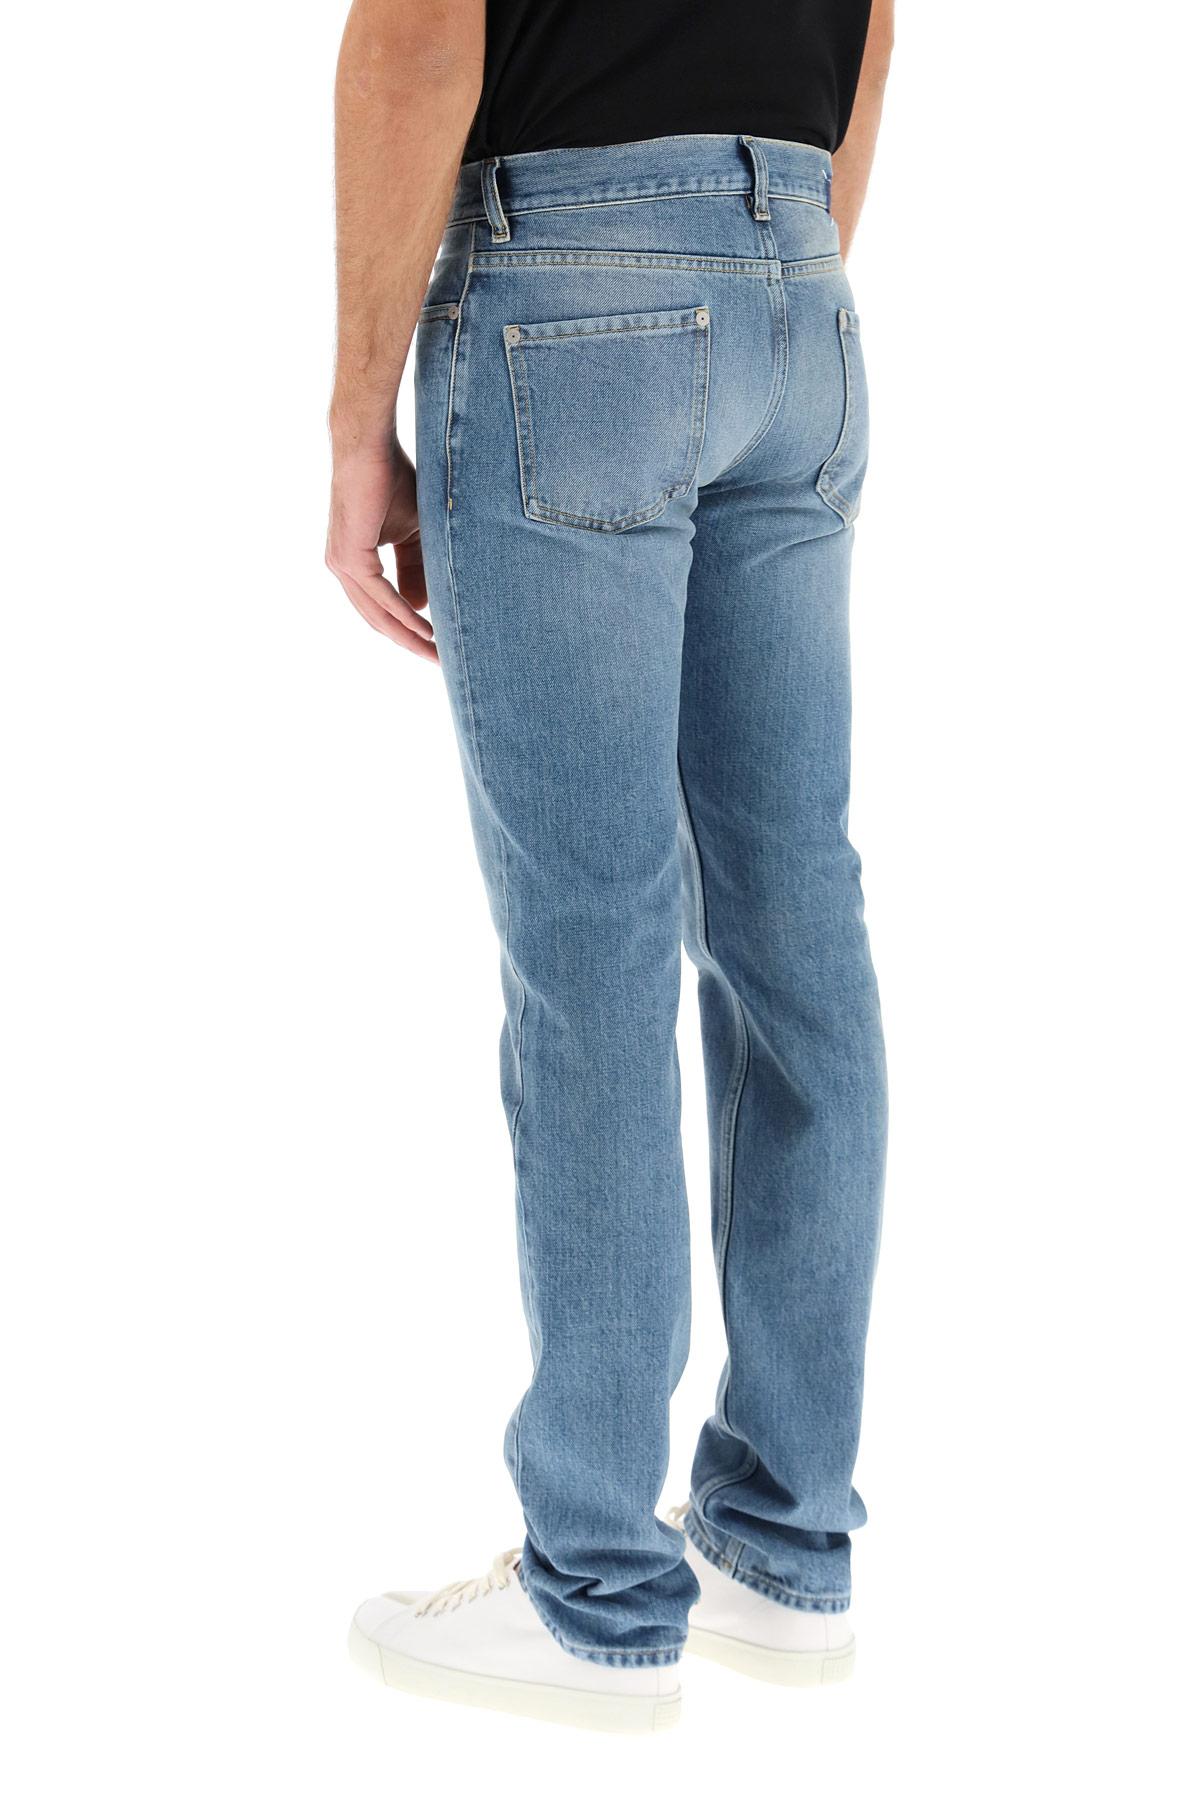 Maison Margiela Denim Classic Jeans in Blue for Men - Lyst